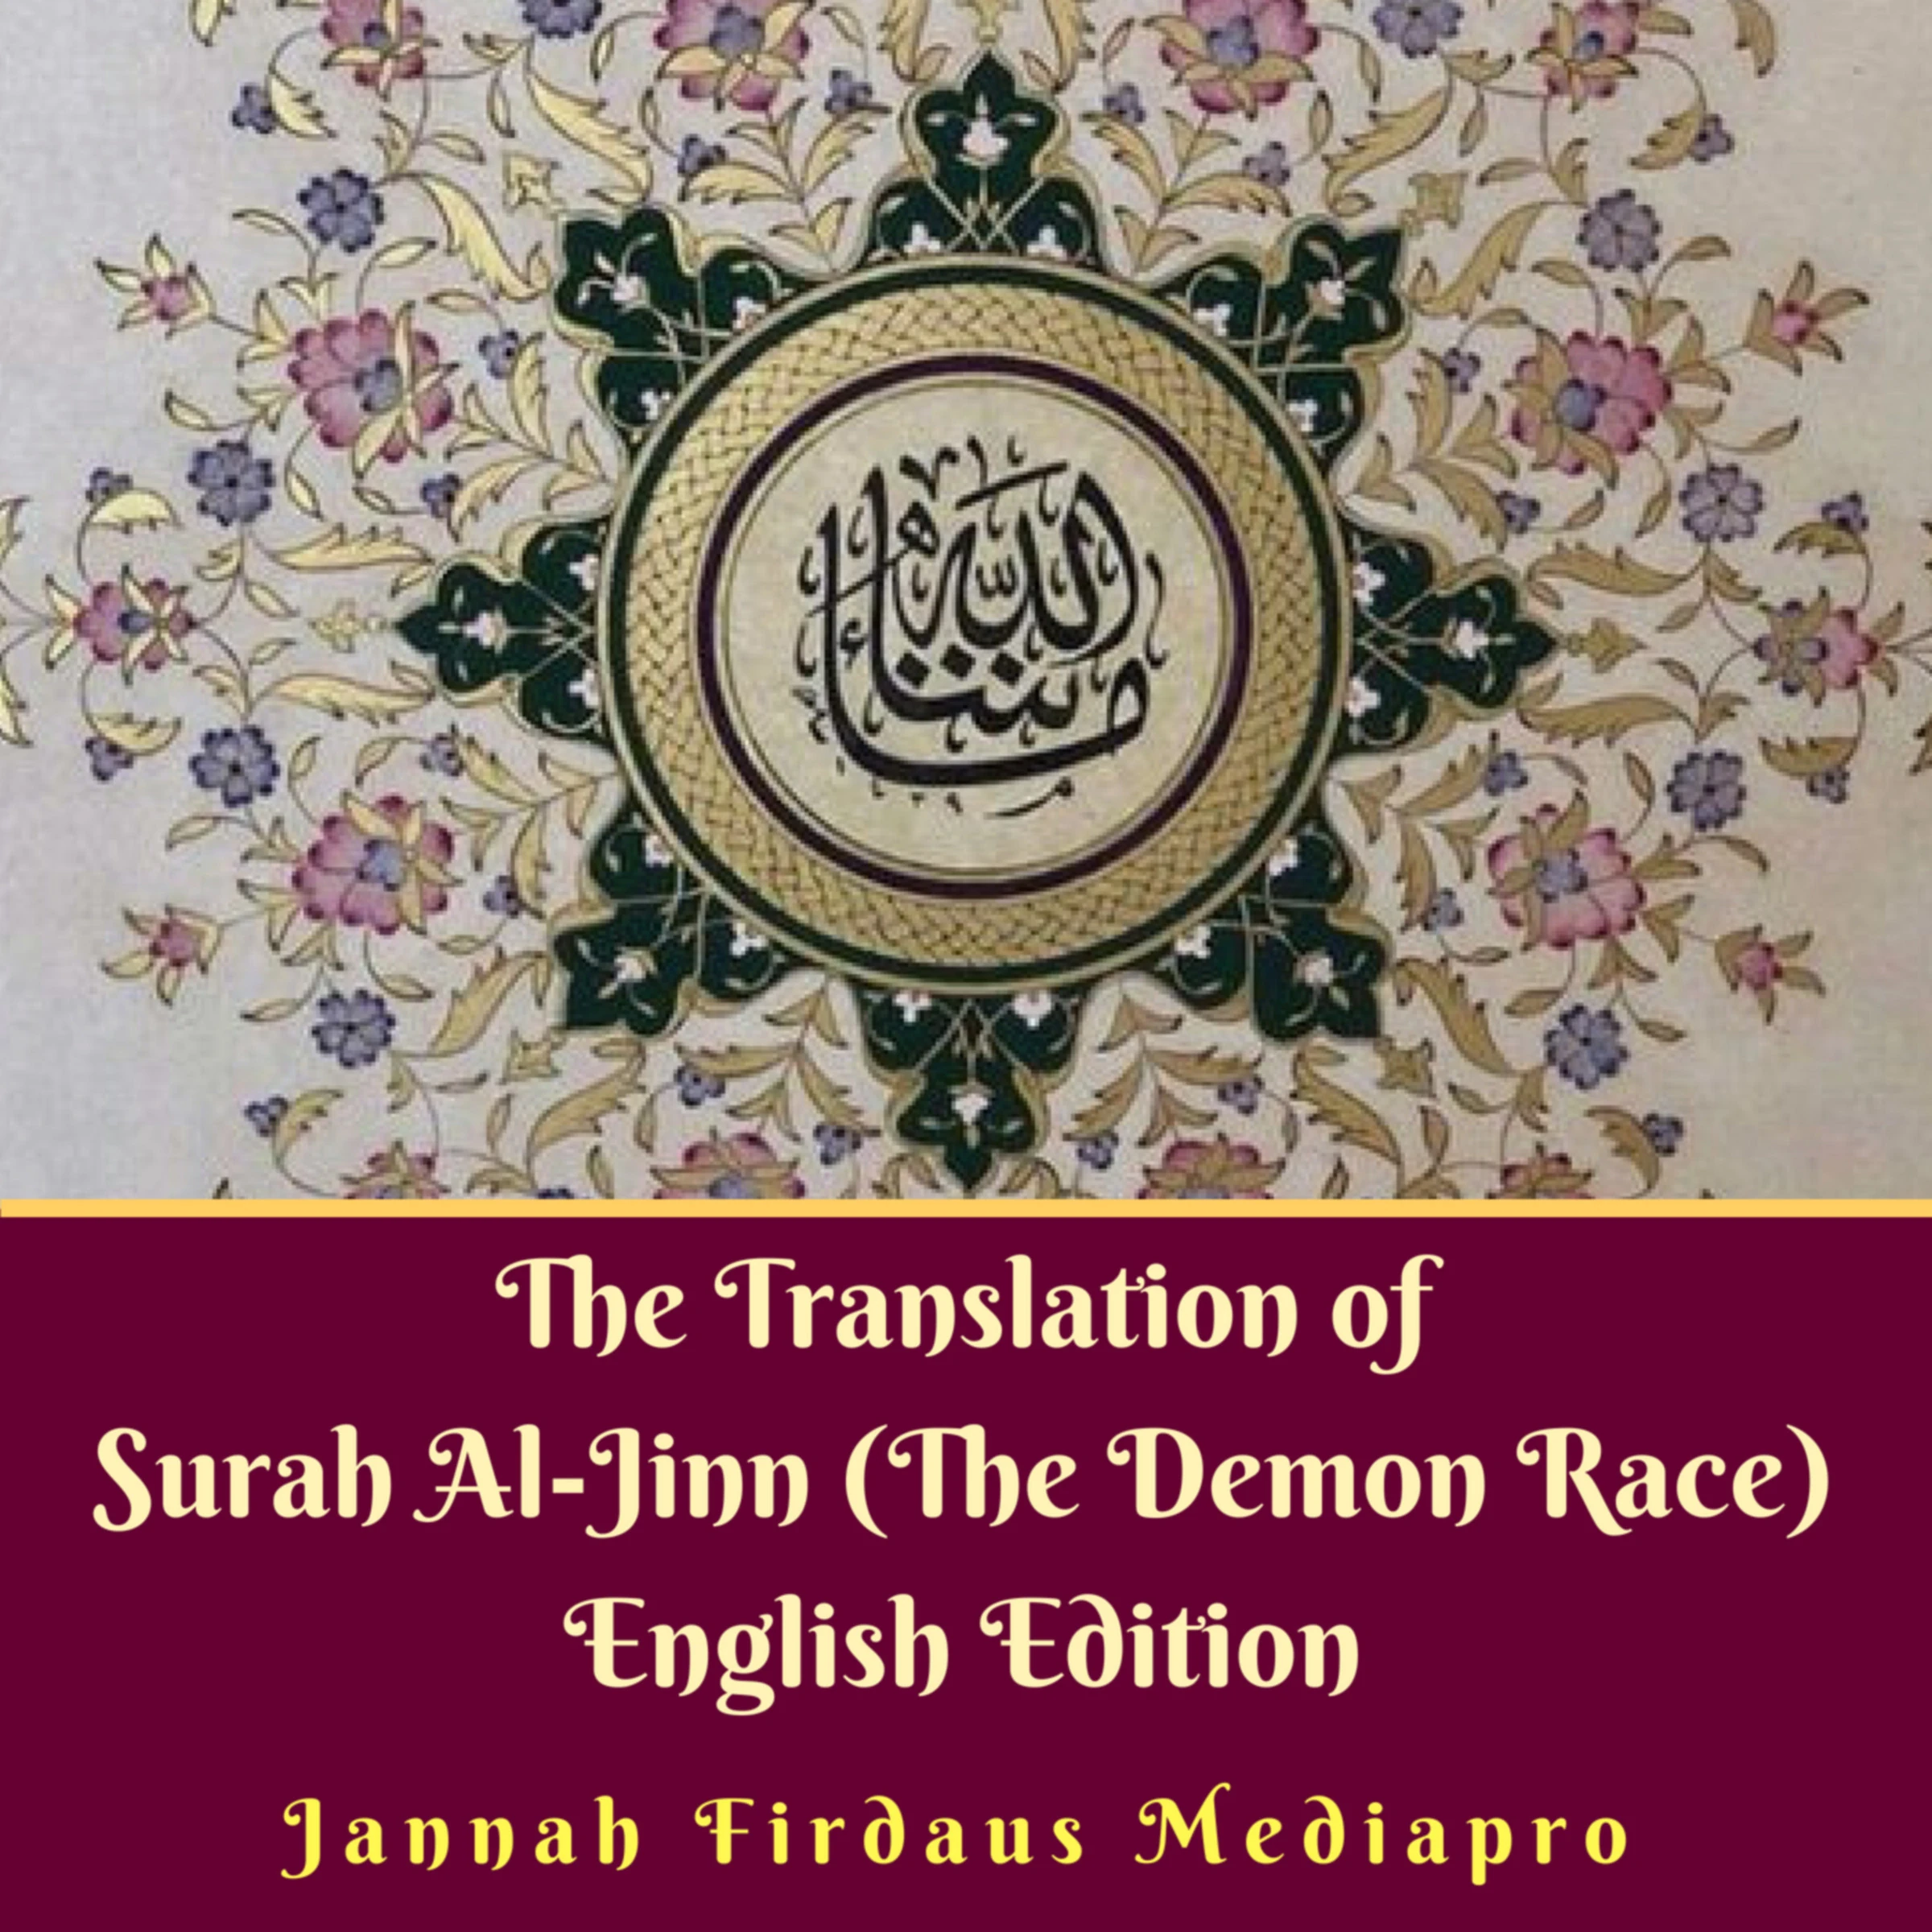 The Translation of Surah Al-Jinn (The Demon Race) English Edition by Jannah Firdaus Mediapro Audiobook